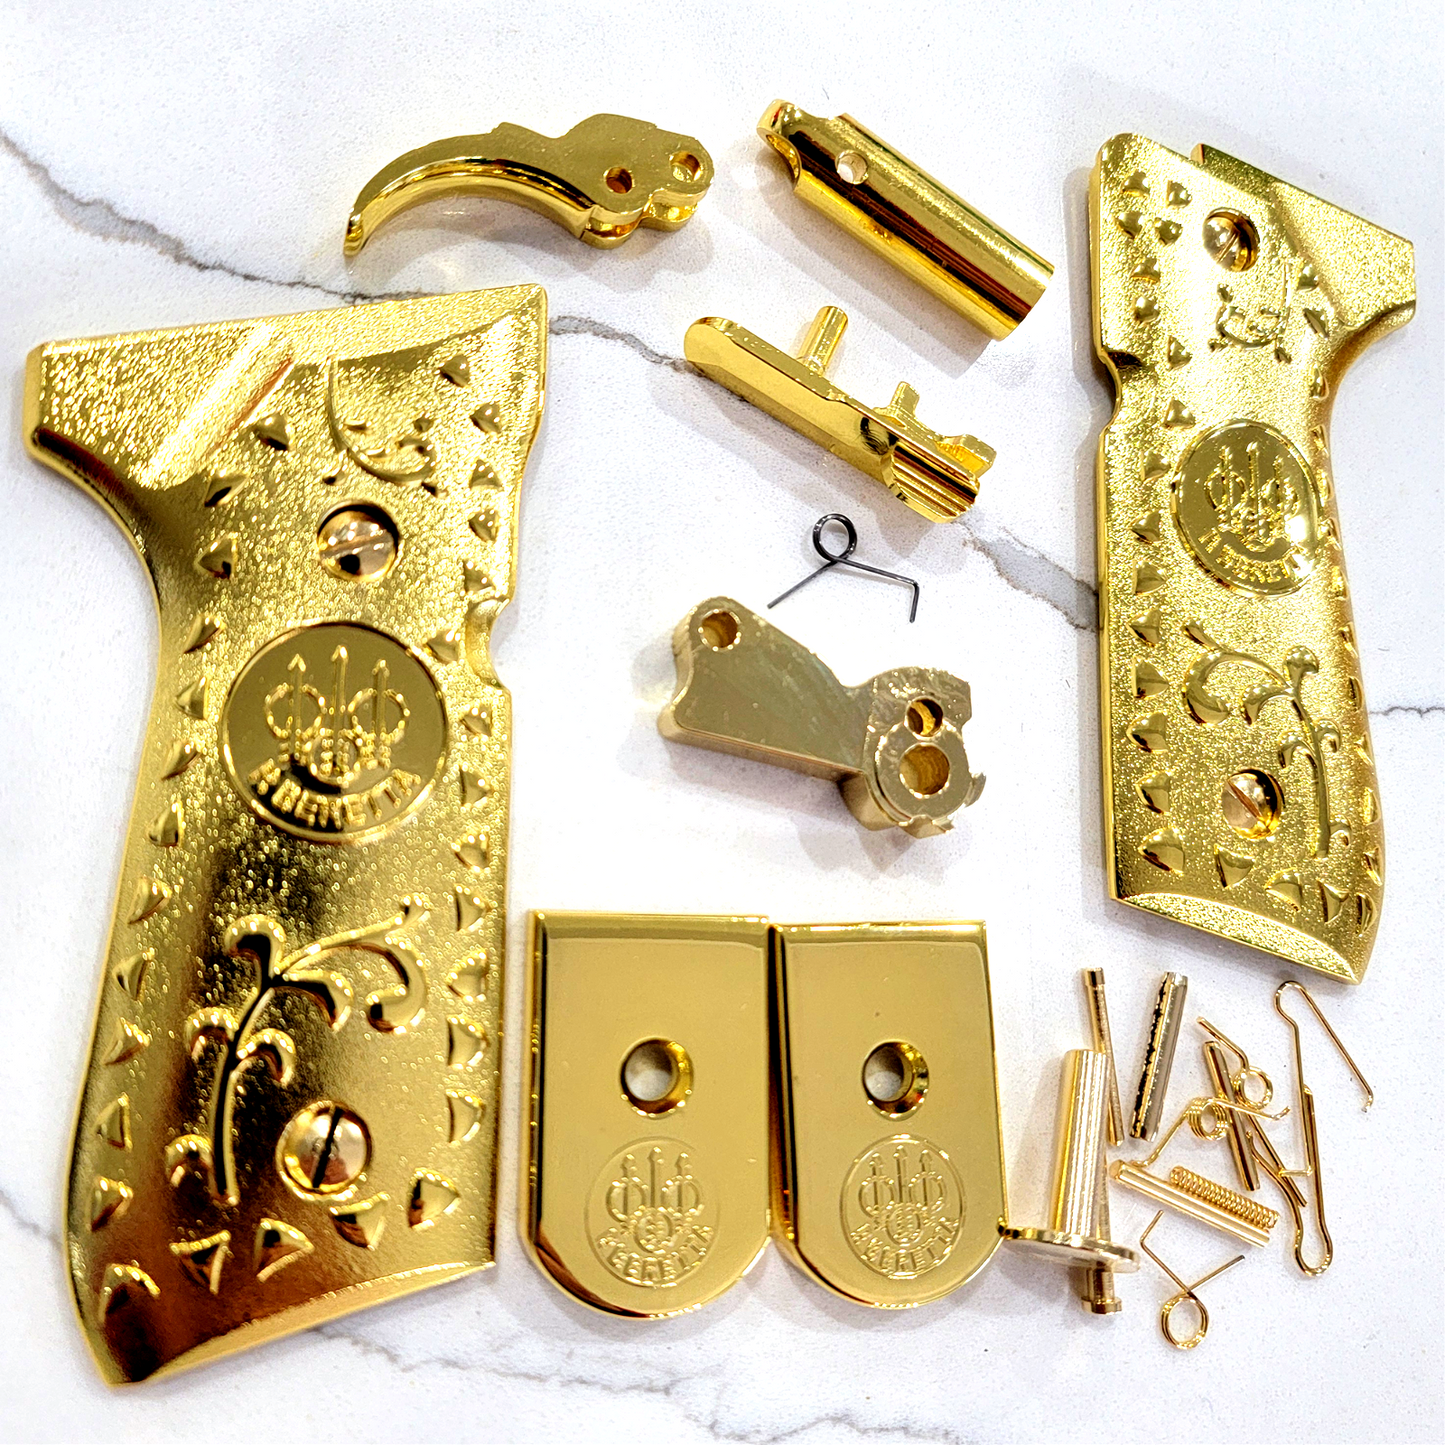 Beretta 92/96 Parts Grips, hammer Trigger slide stop, Pins Screws, Plates, Gold